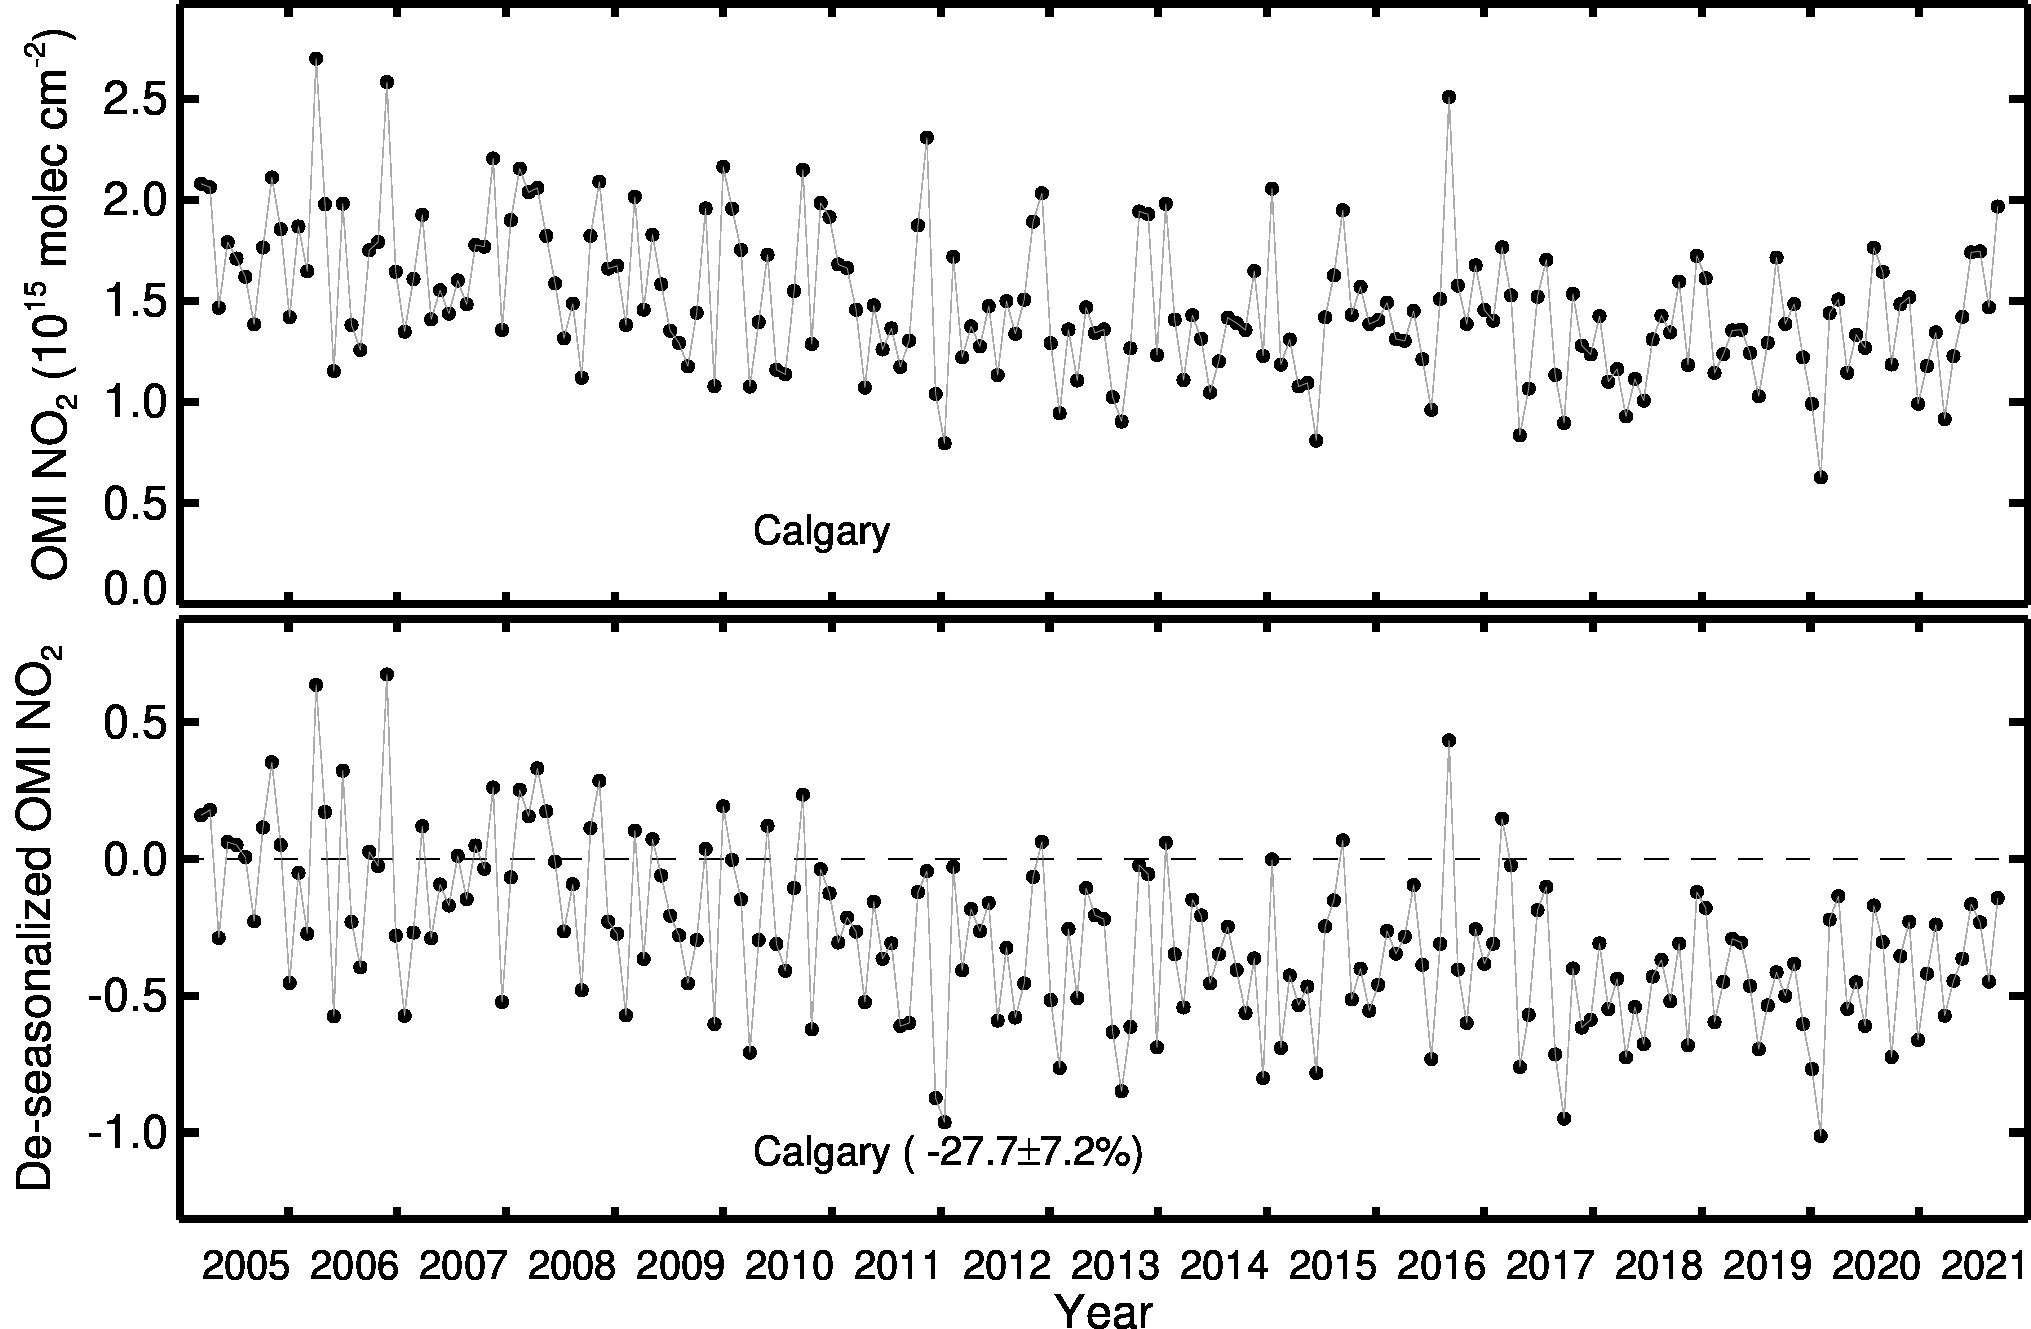 Calgary Line Plot 2005-2021